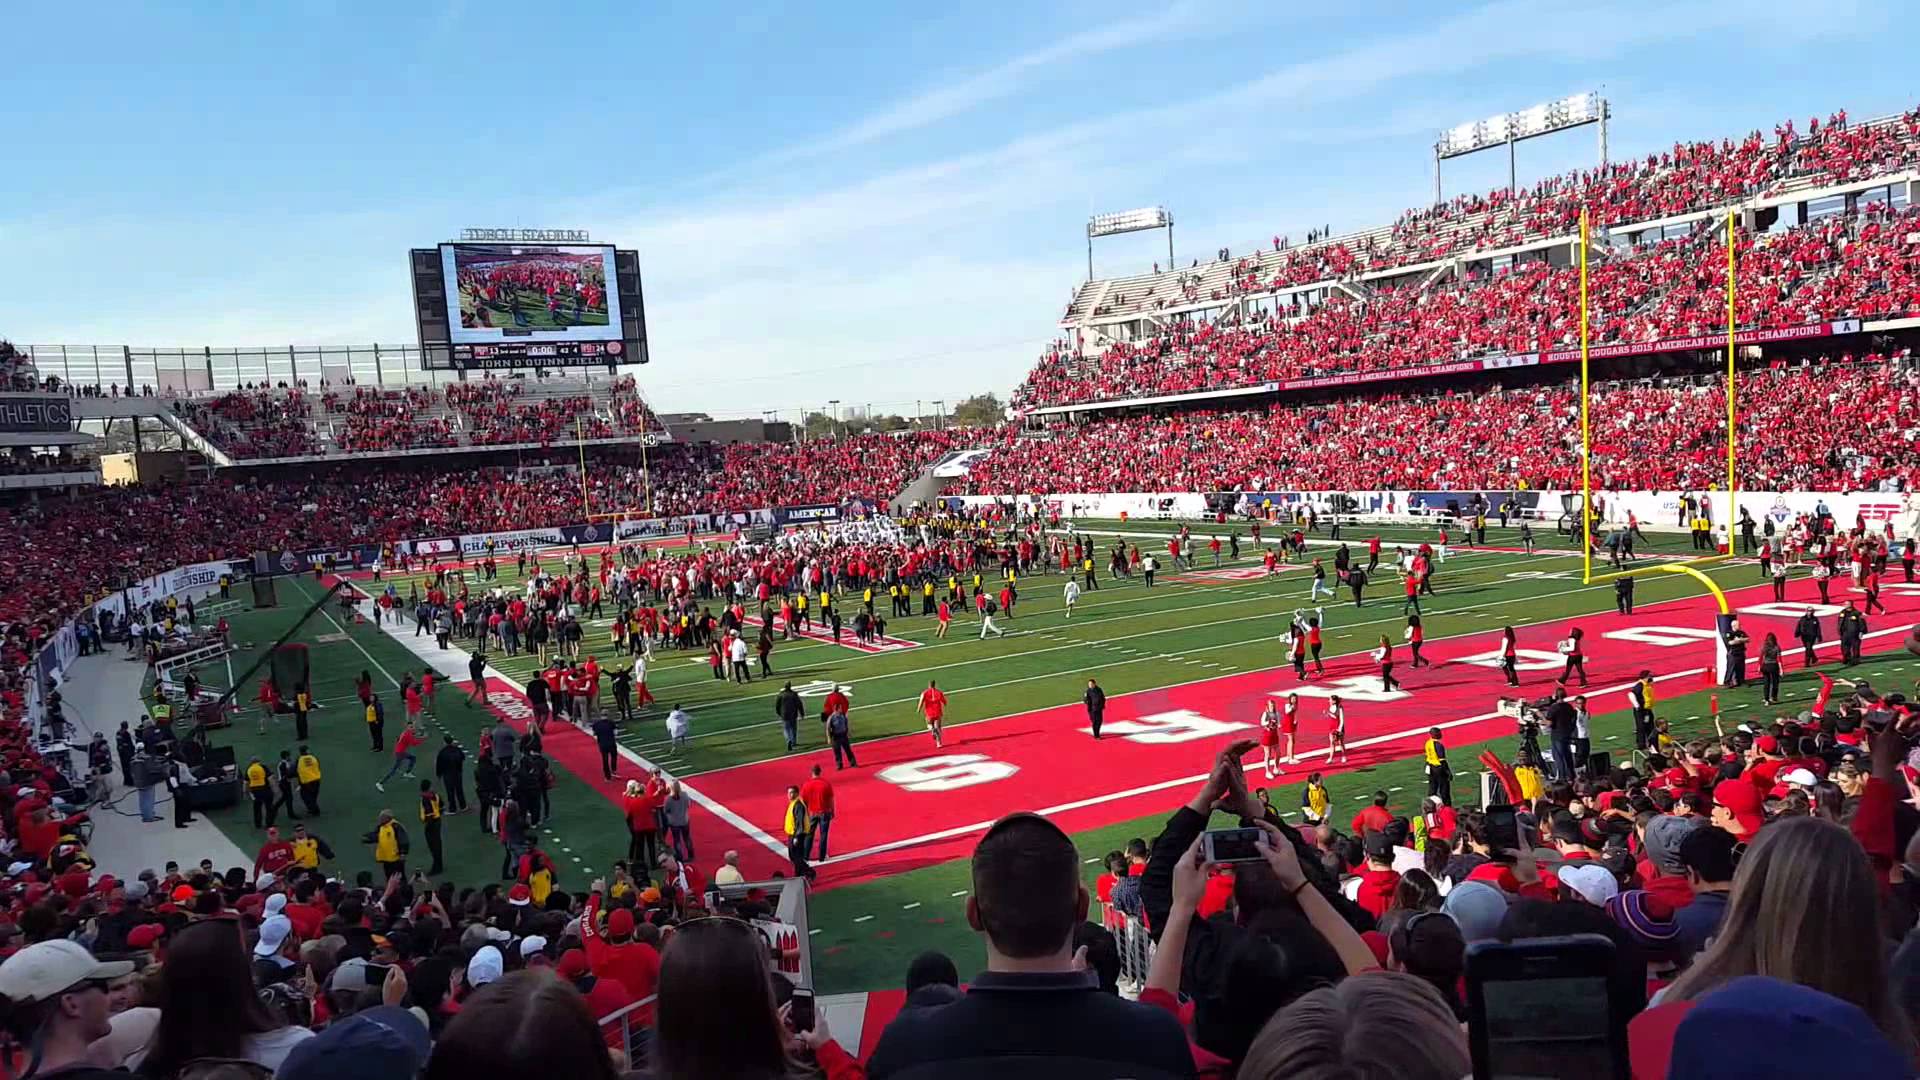 University of Houston crowd trickles onto field - YouTube